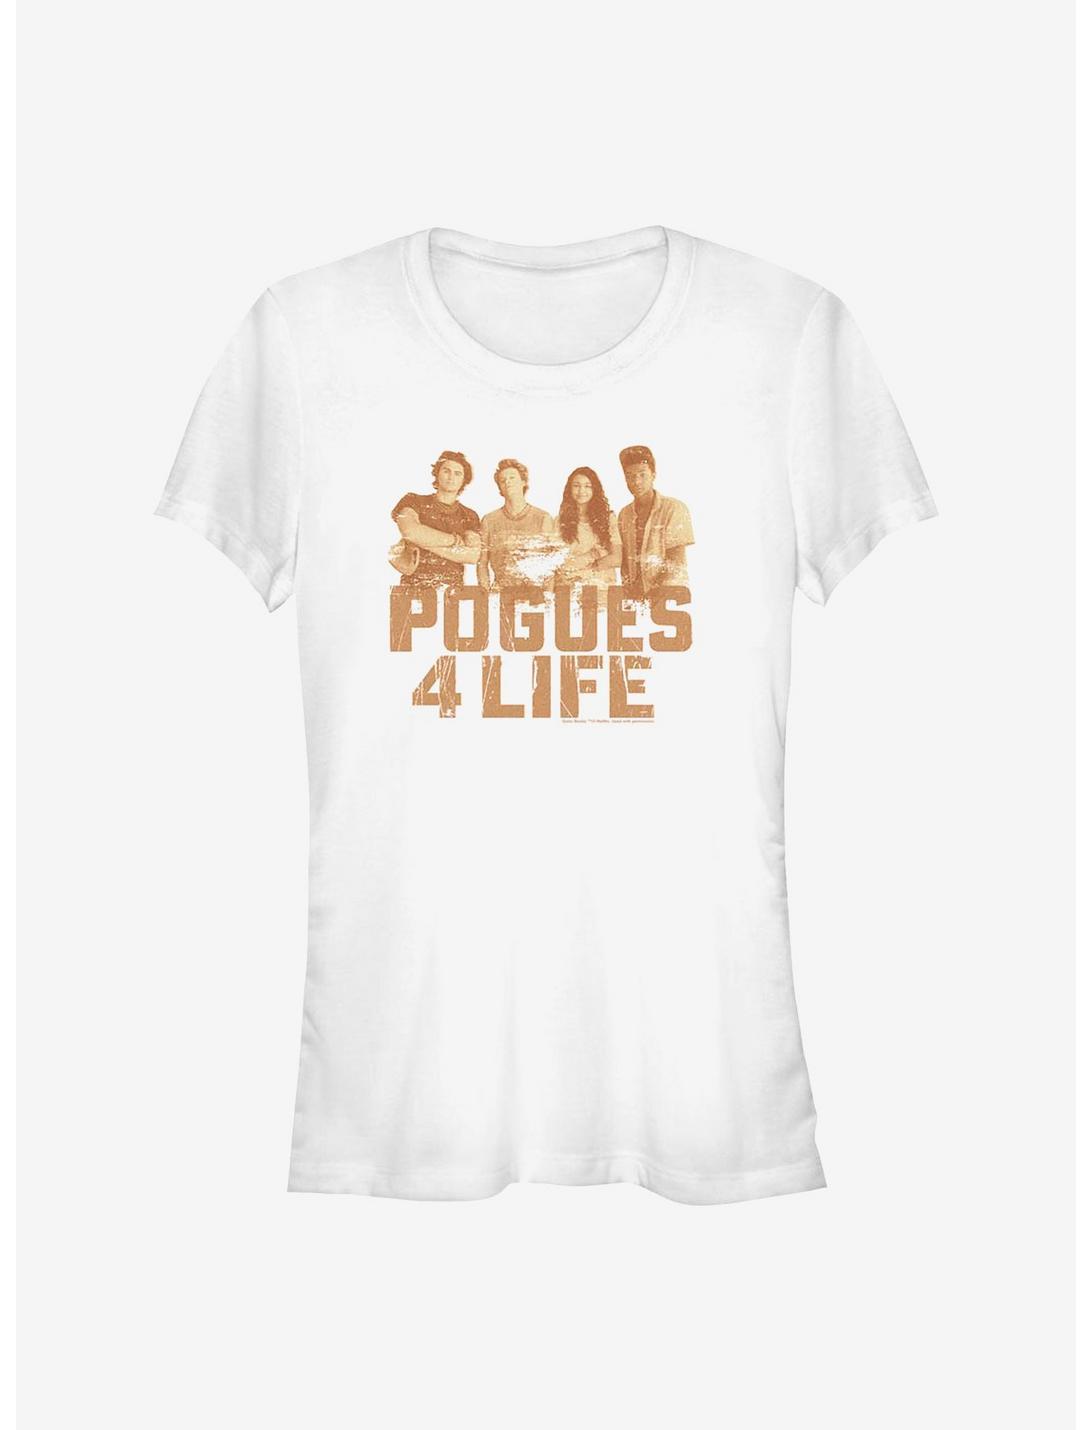 Outer Banks Pogues 4 Life Girls T-Shirt, WHITE, hi-res